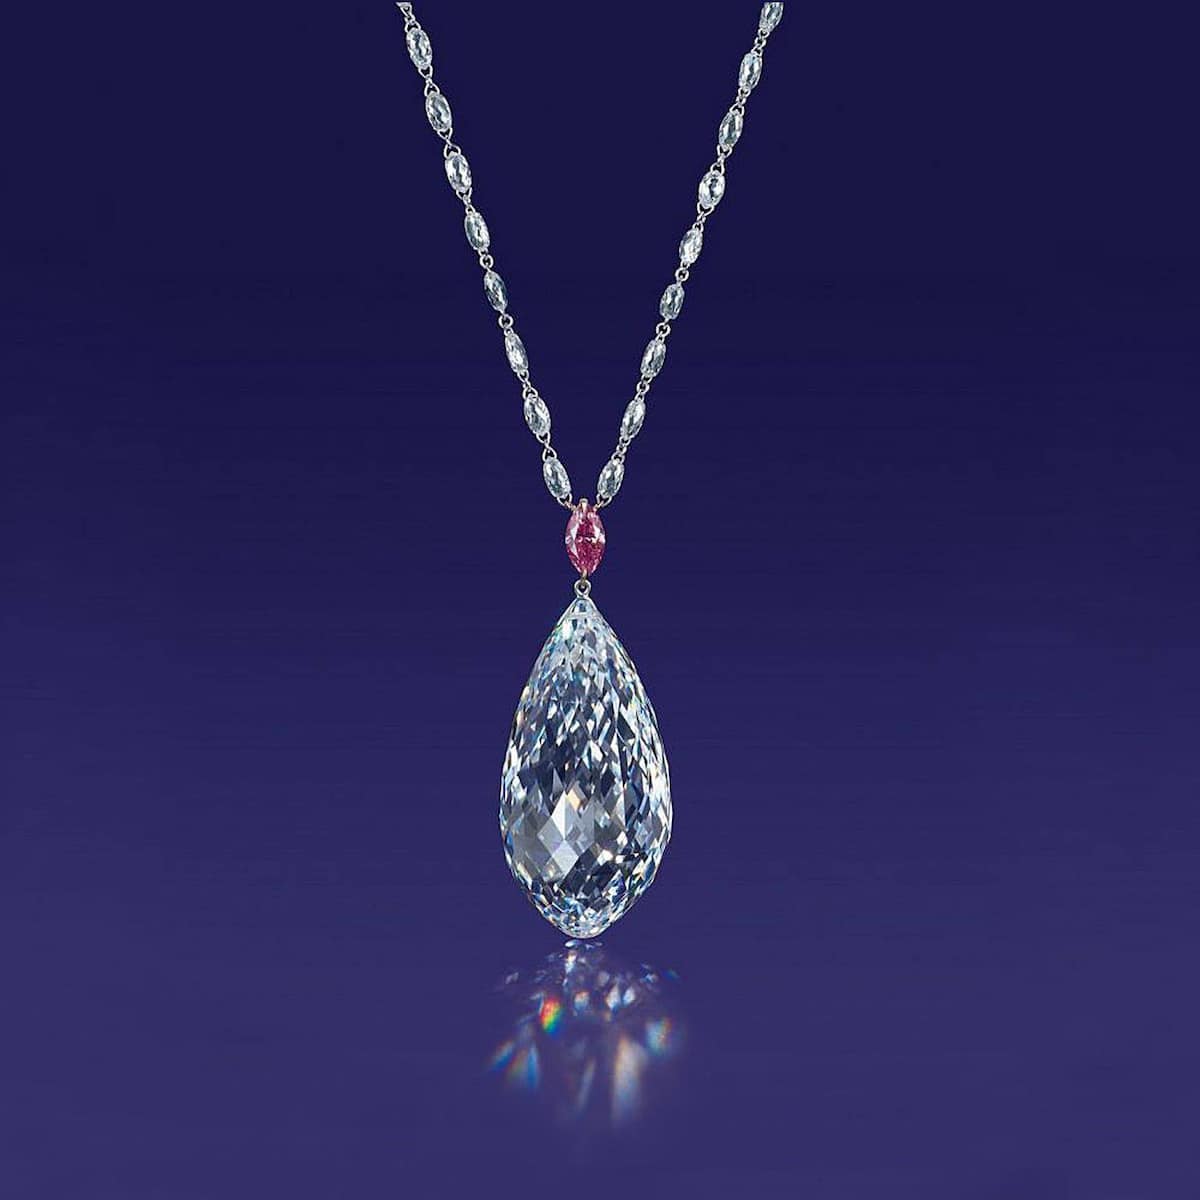 Diamond Necklace As Jewelry Luxurious, Expensive Jewellery, Stock Photo -  Image of ring, wedding: 178493102